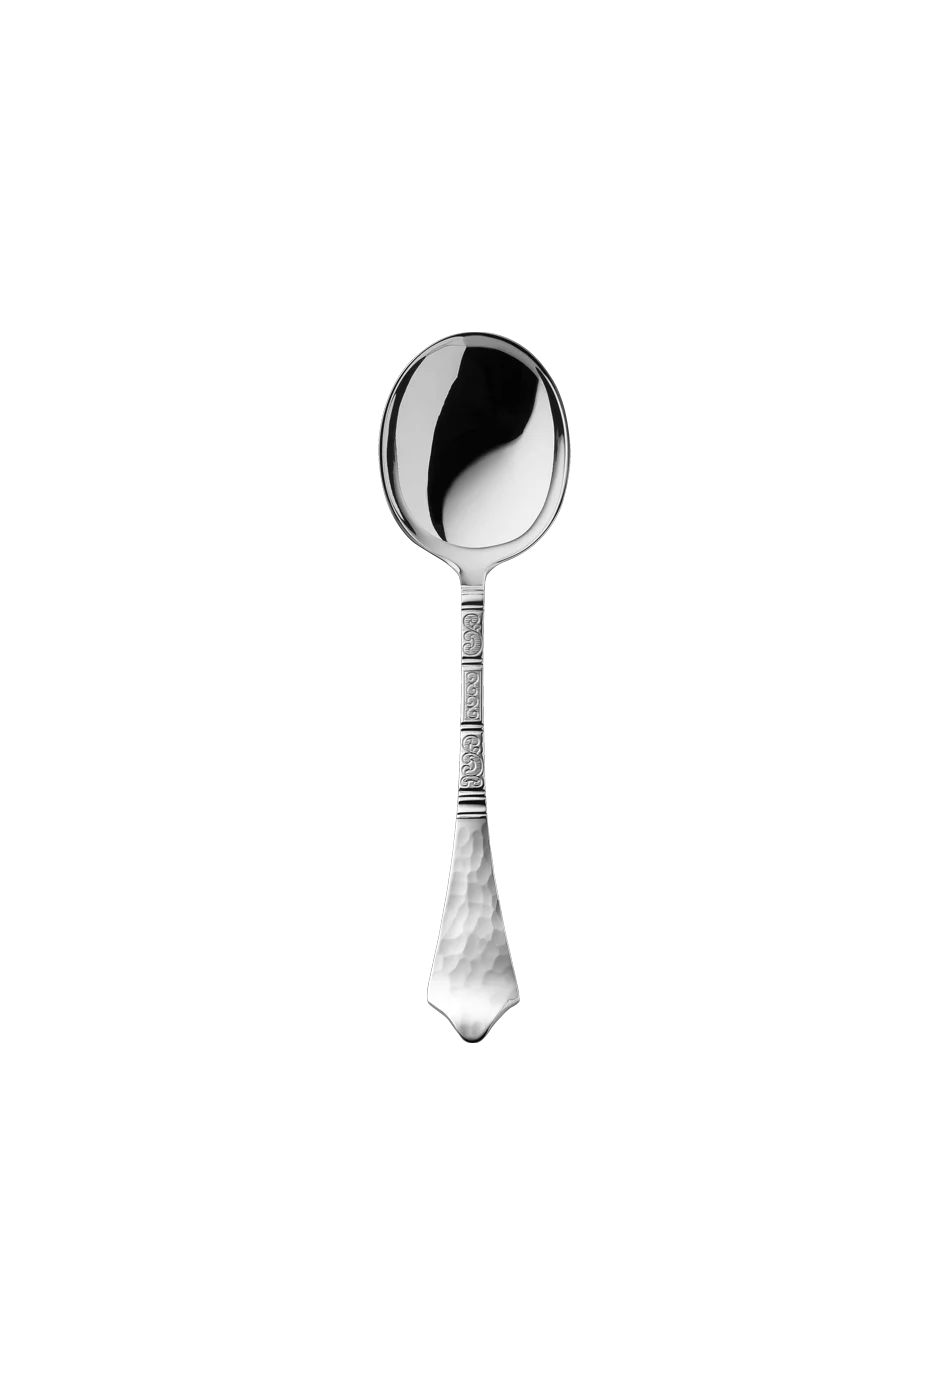 Hermitage Cream Spoon (Broth Spoon ) (925 Sterling Silver)